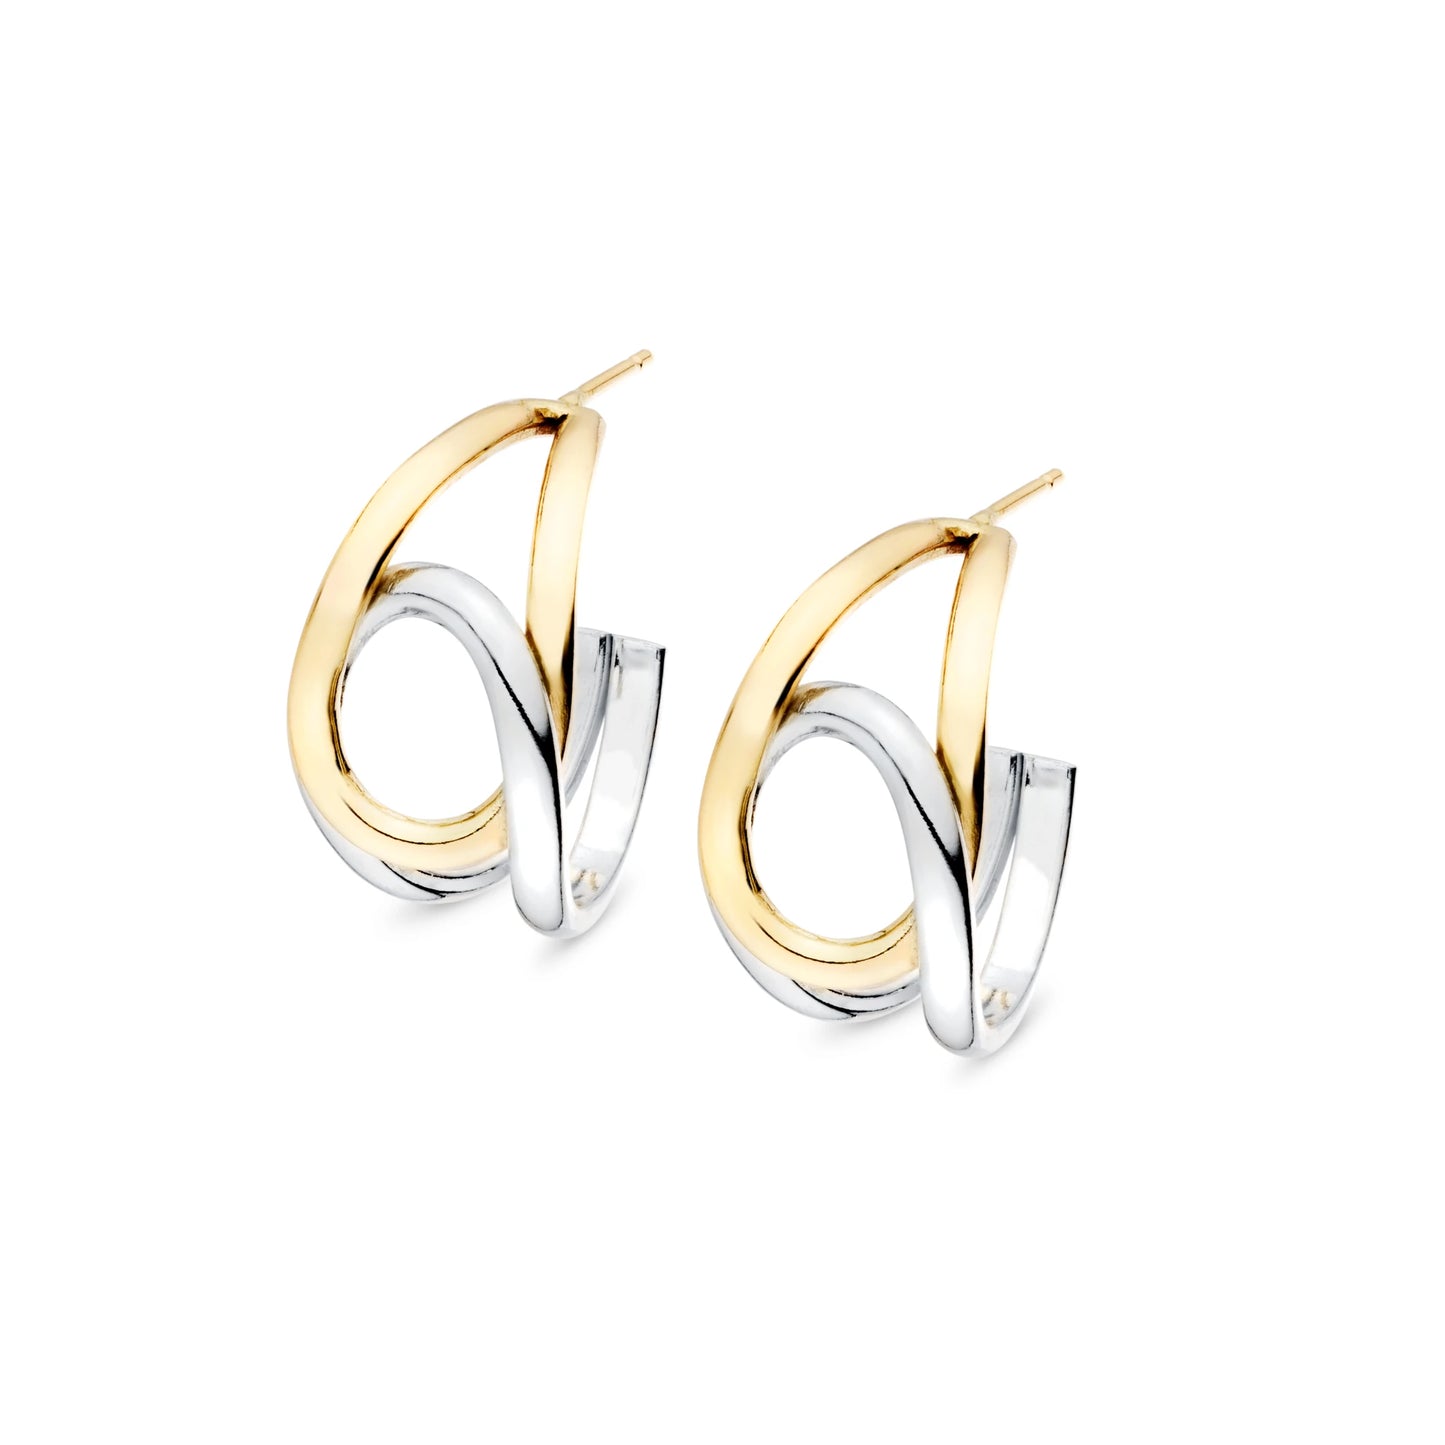 Weave Hoop Earrings - 9kt Gold & Sterling Silver